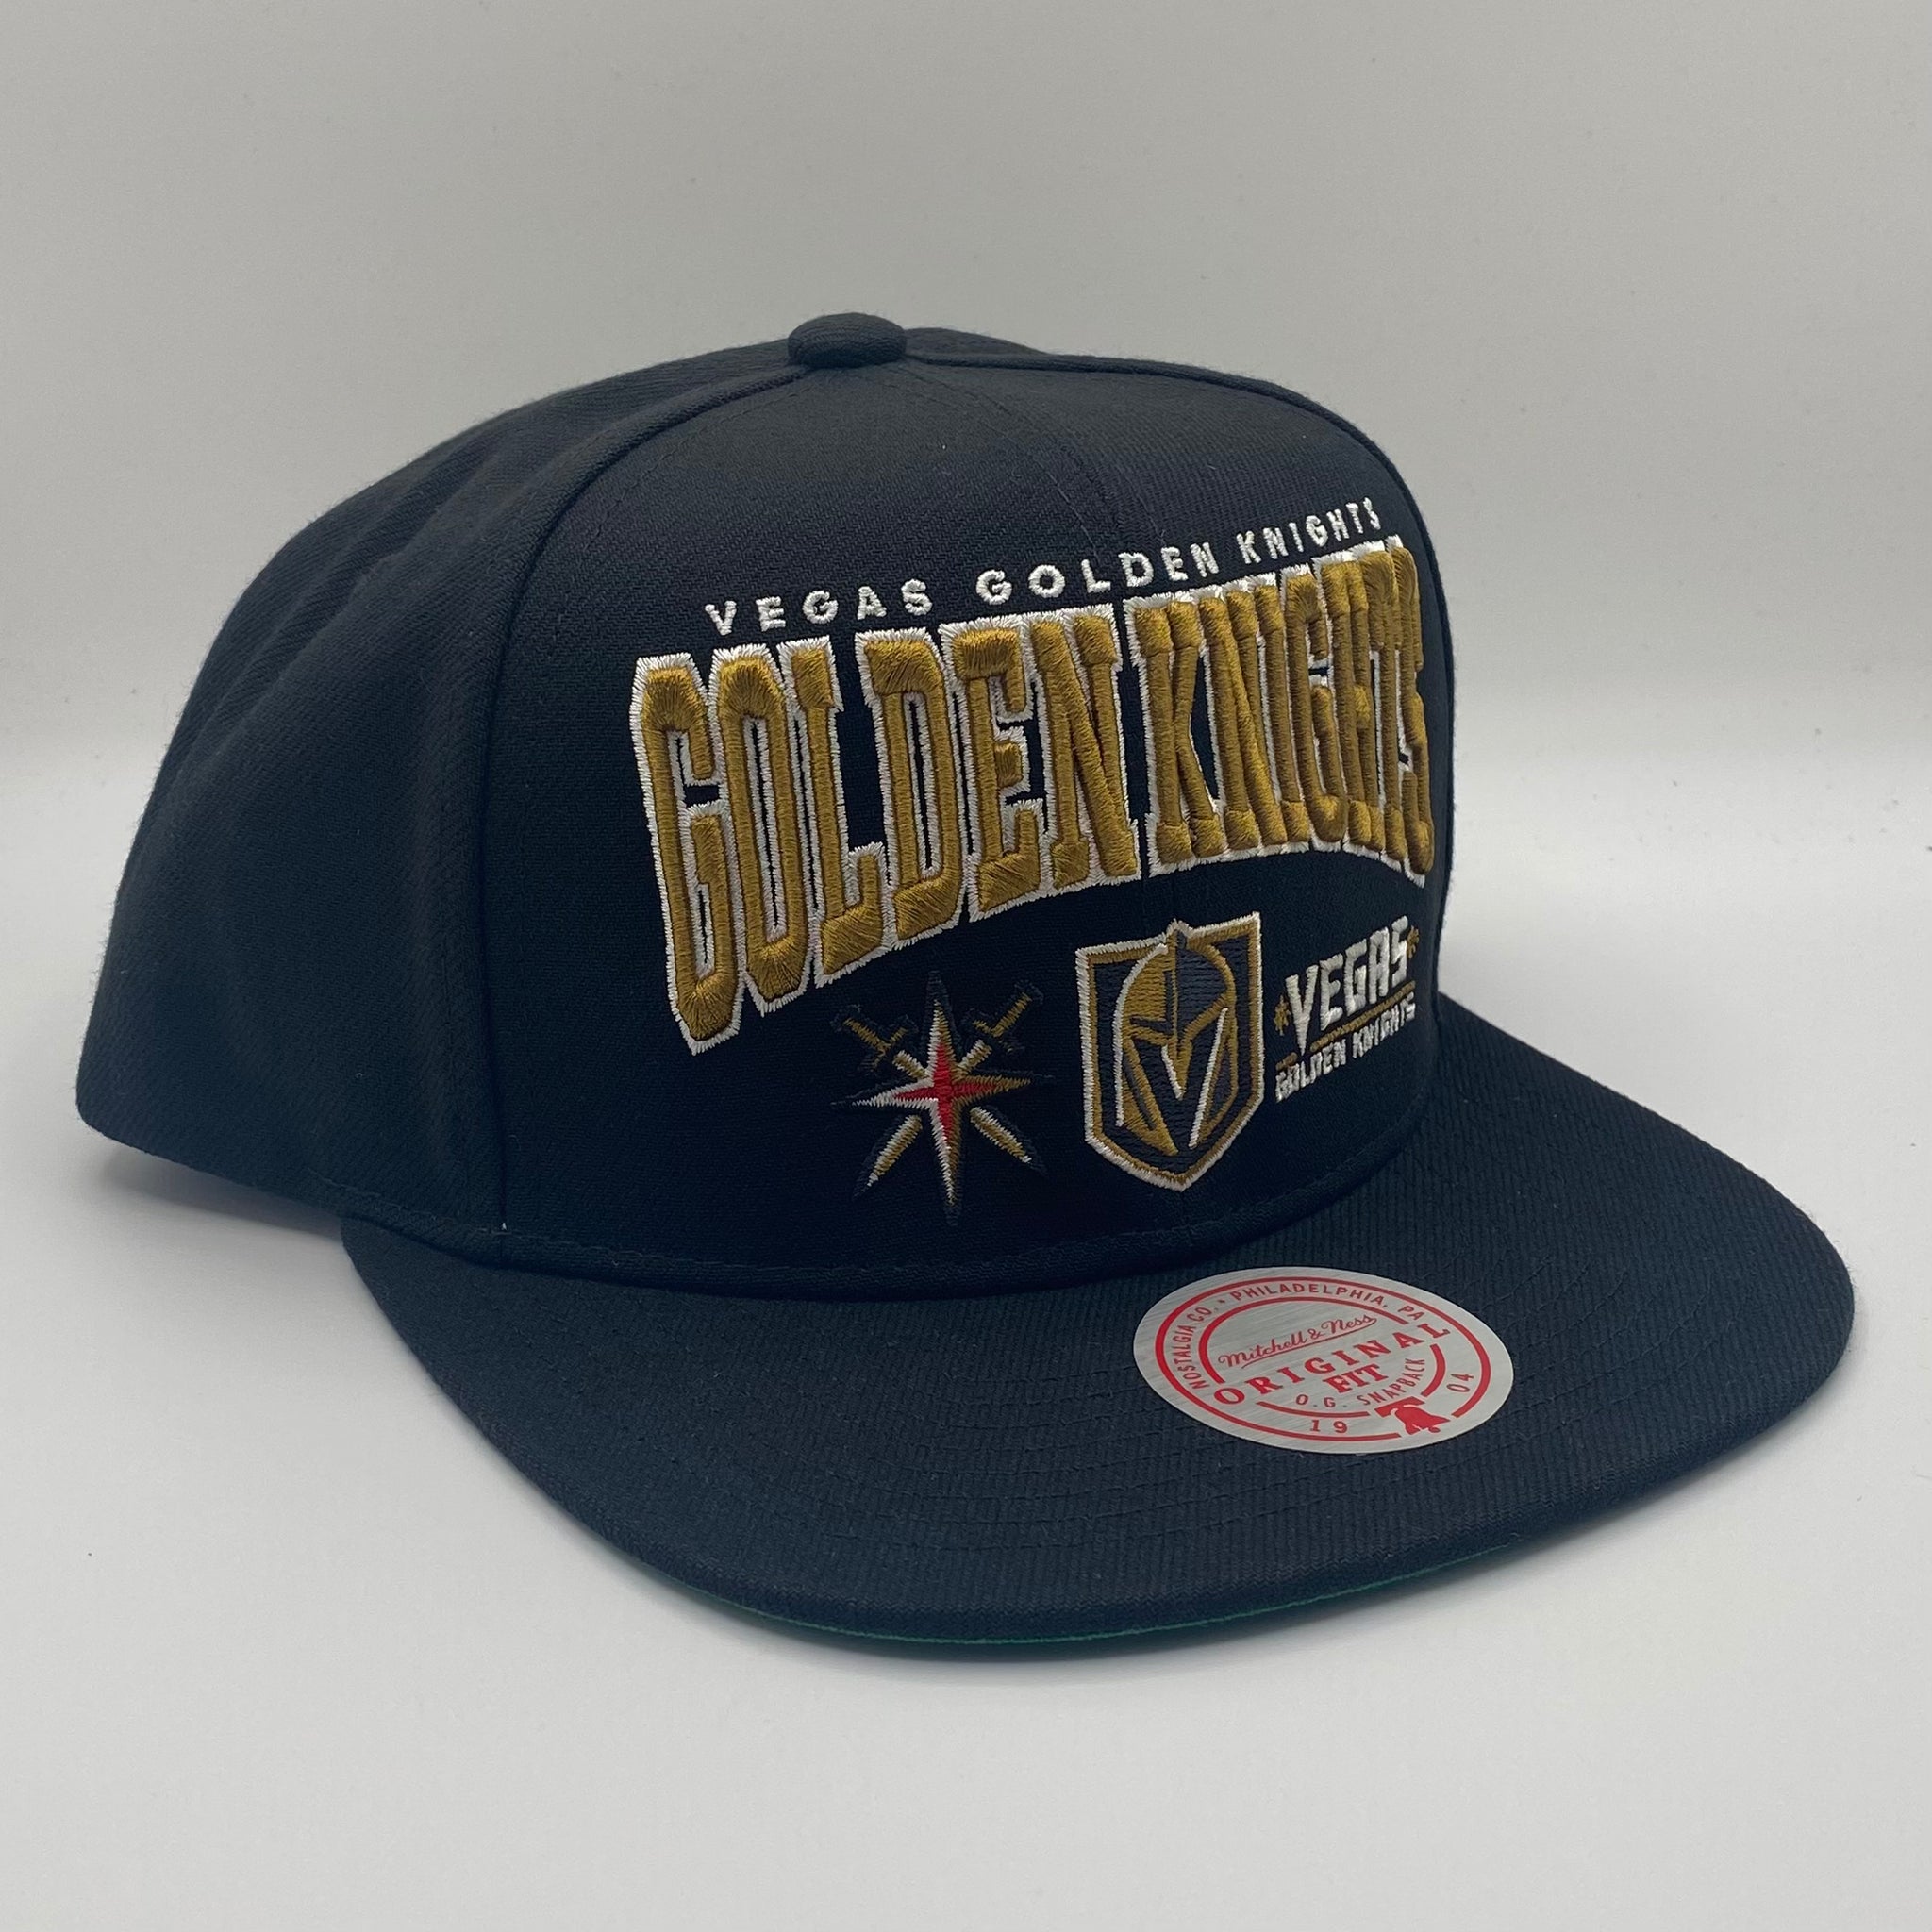 Vegas Golden Knights Triple Logo Adjustable Hat - Black